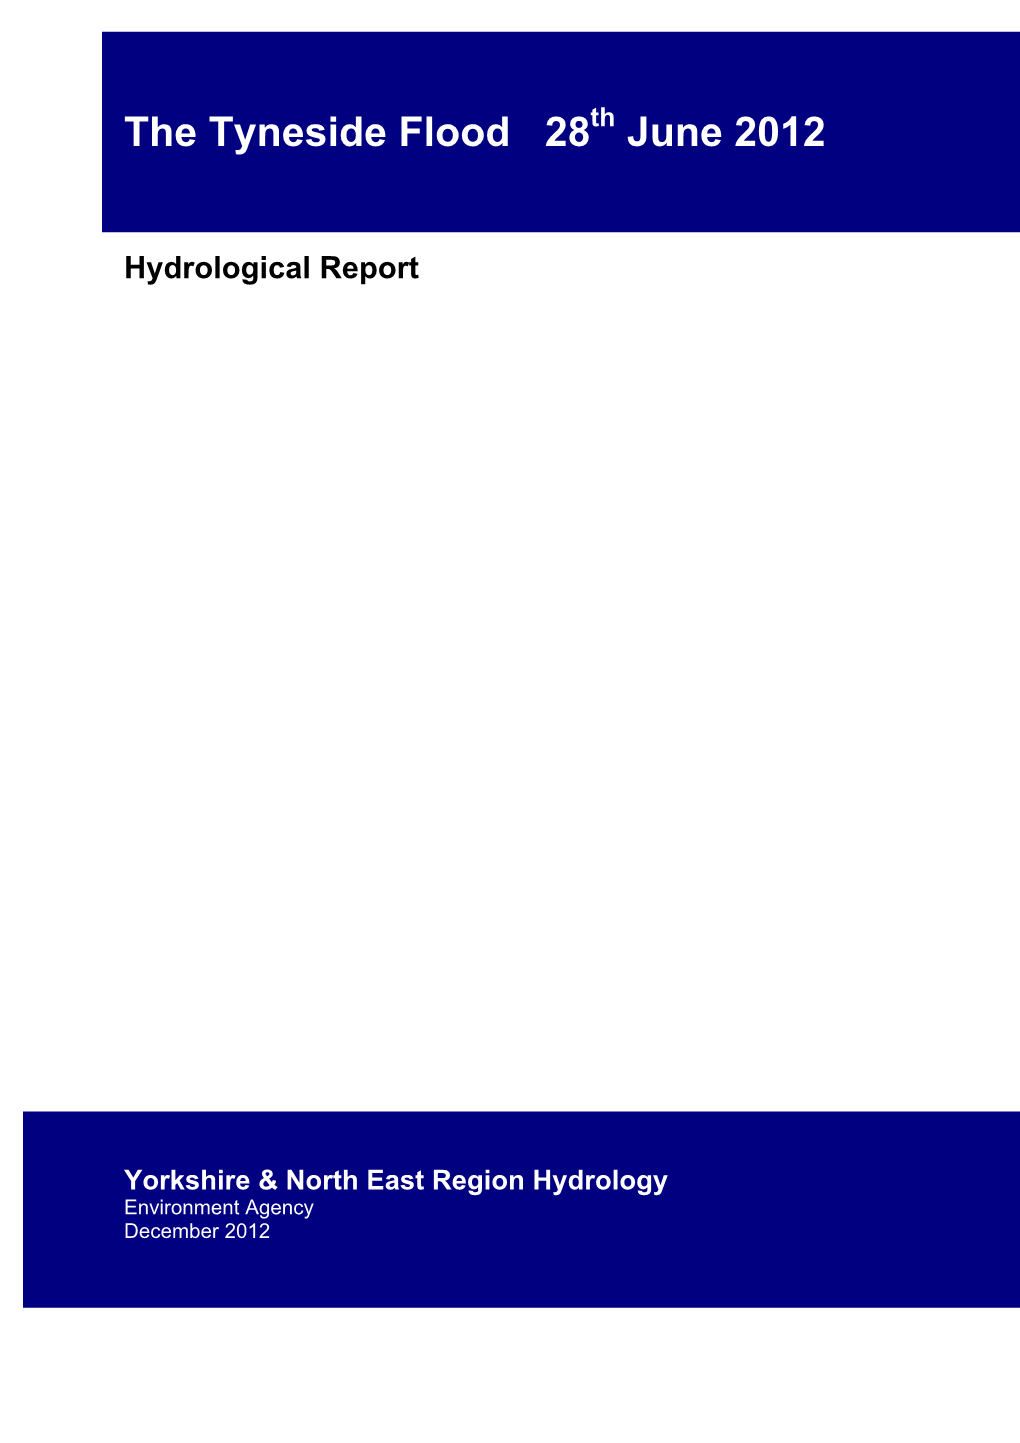 June 28Th Tyneside Flood Hydrology Report